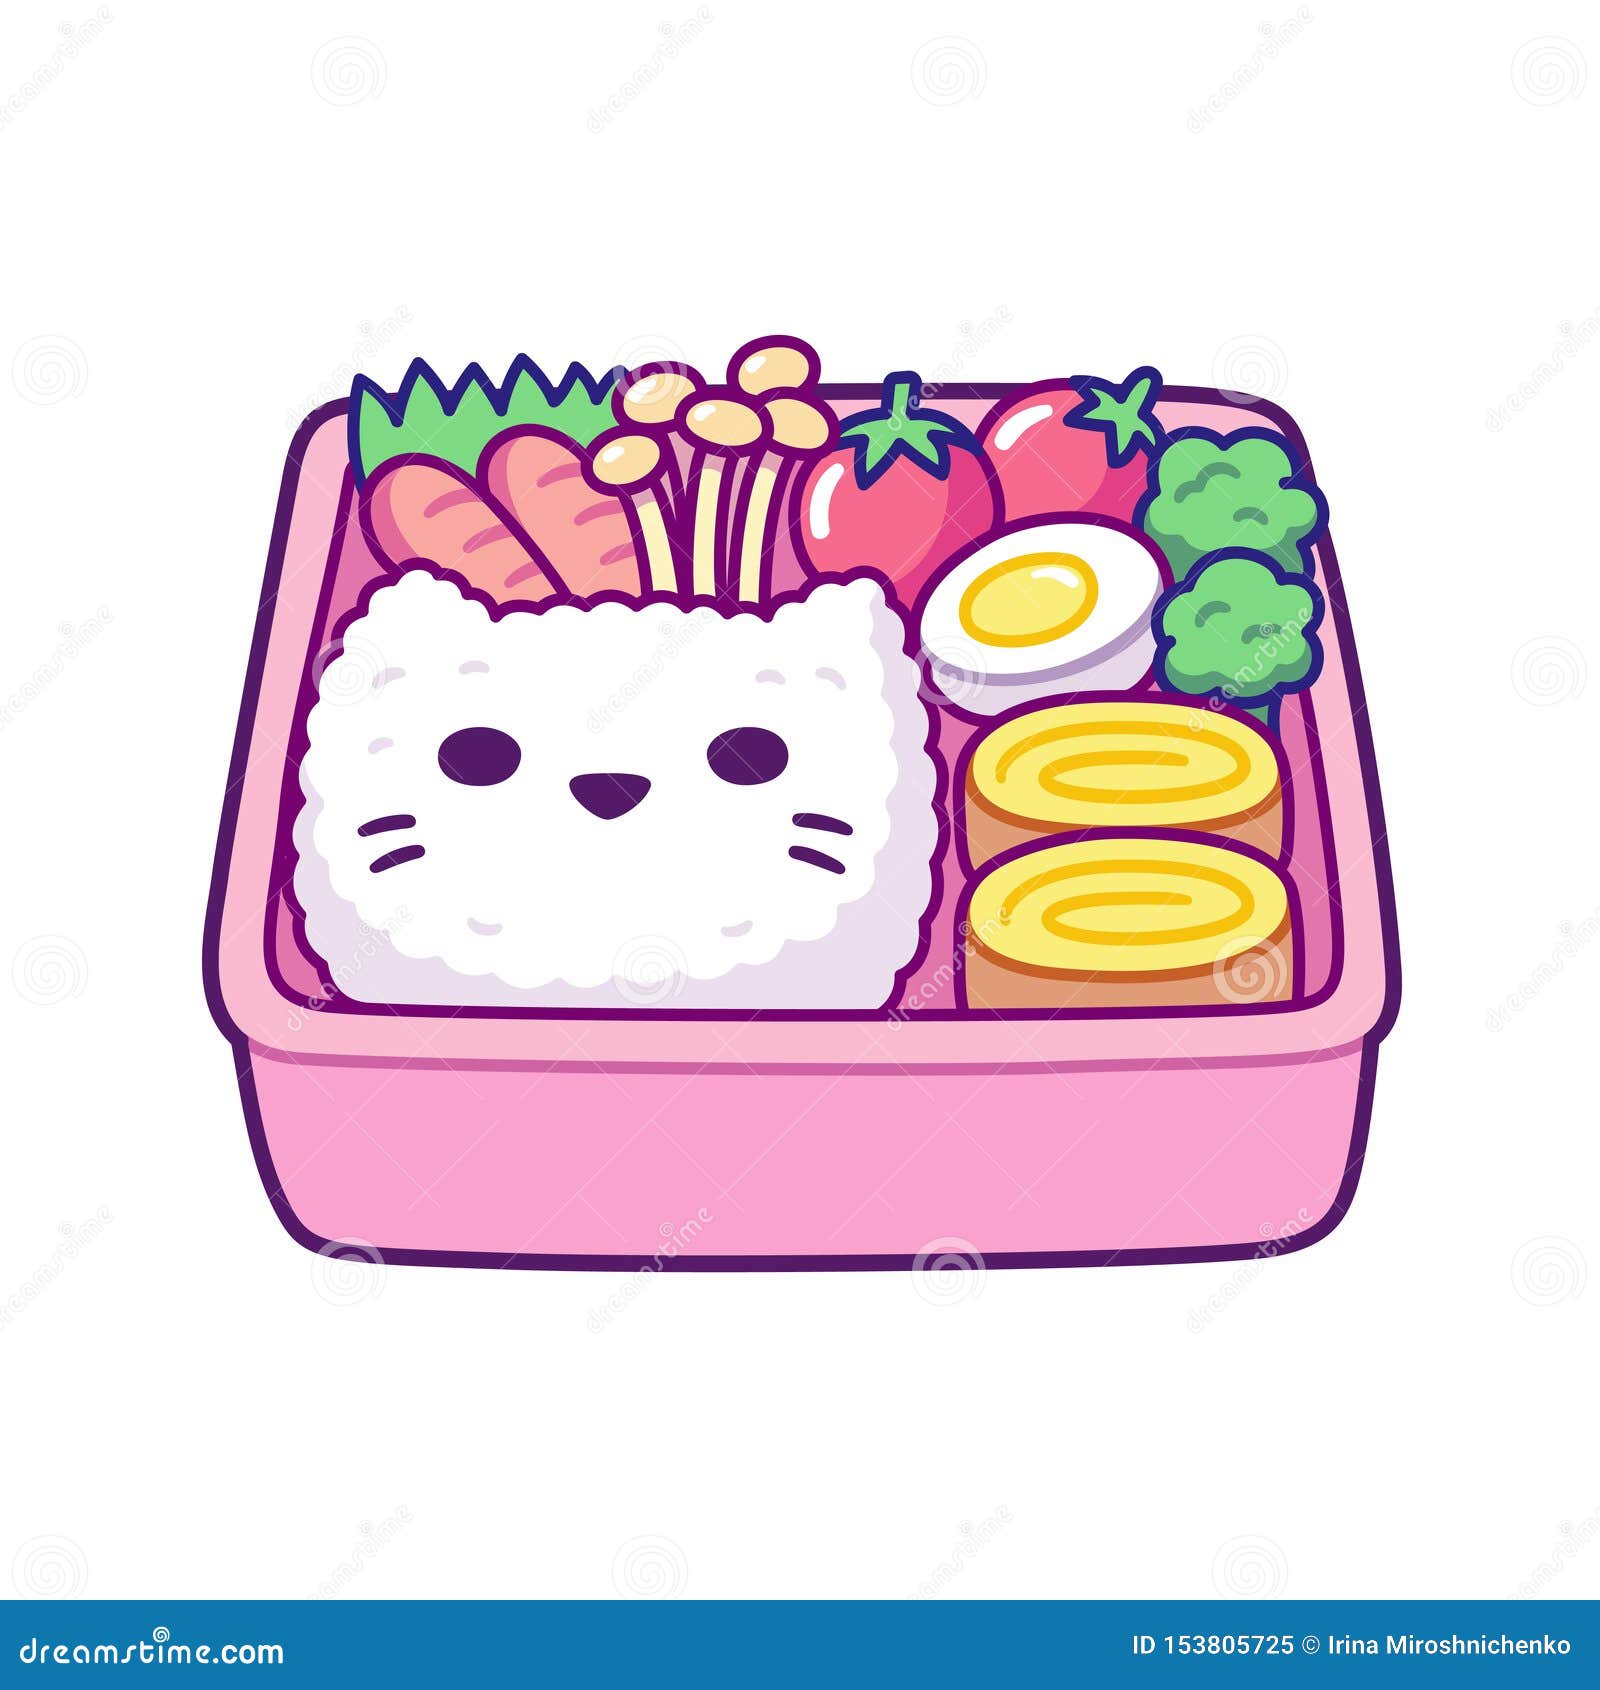 https://thumbs.dreamstime.com/z/cute-cartoon-bento-box-cat-face-shaped-rice-egg-rolls-mushrooms-vegetables-traditional-japanese-lunchbox-kids-simple-153805725.jpg